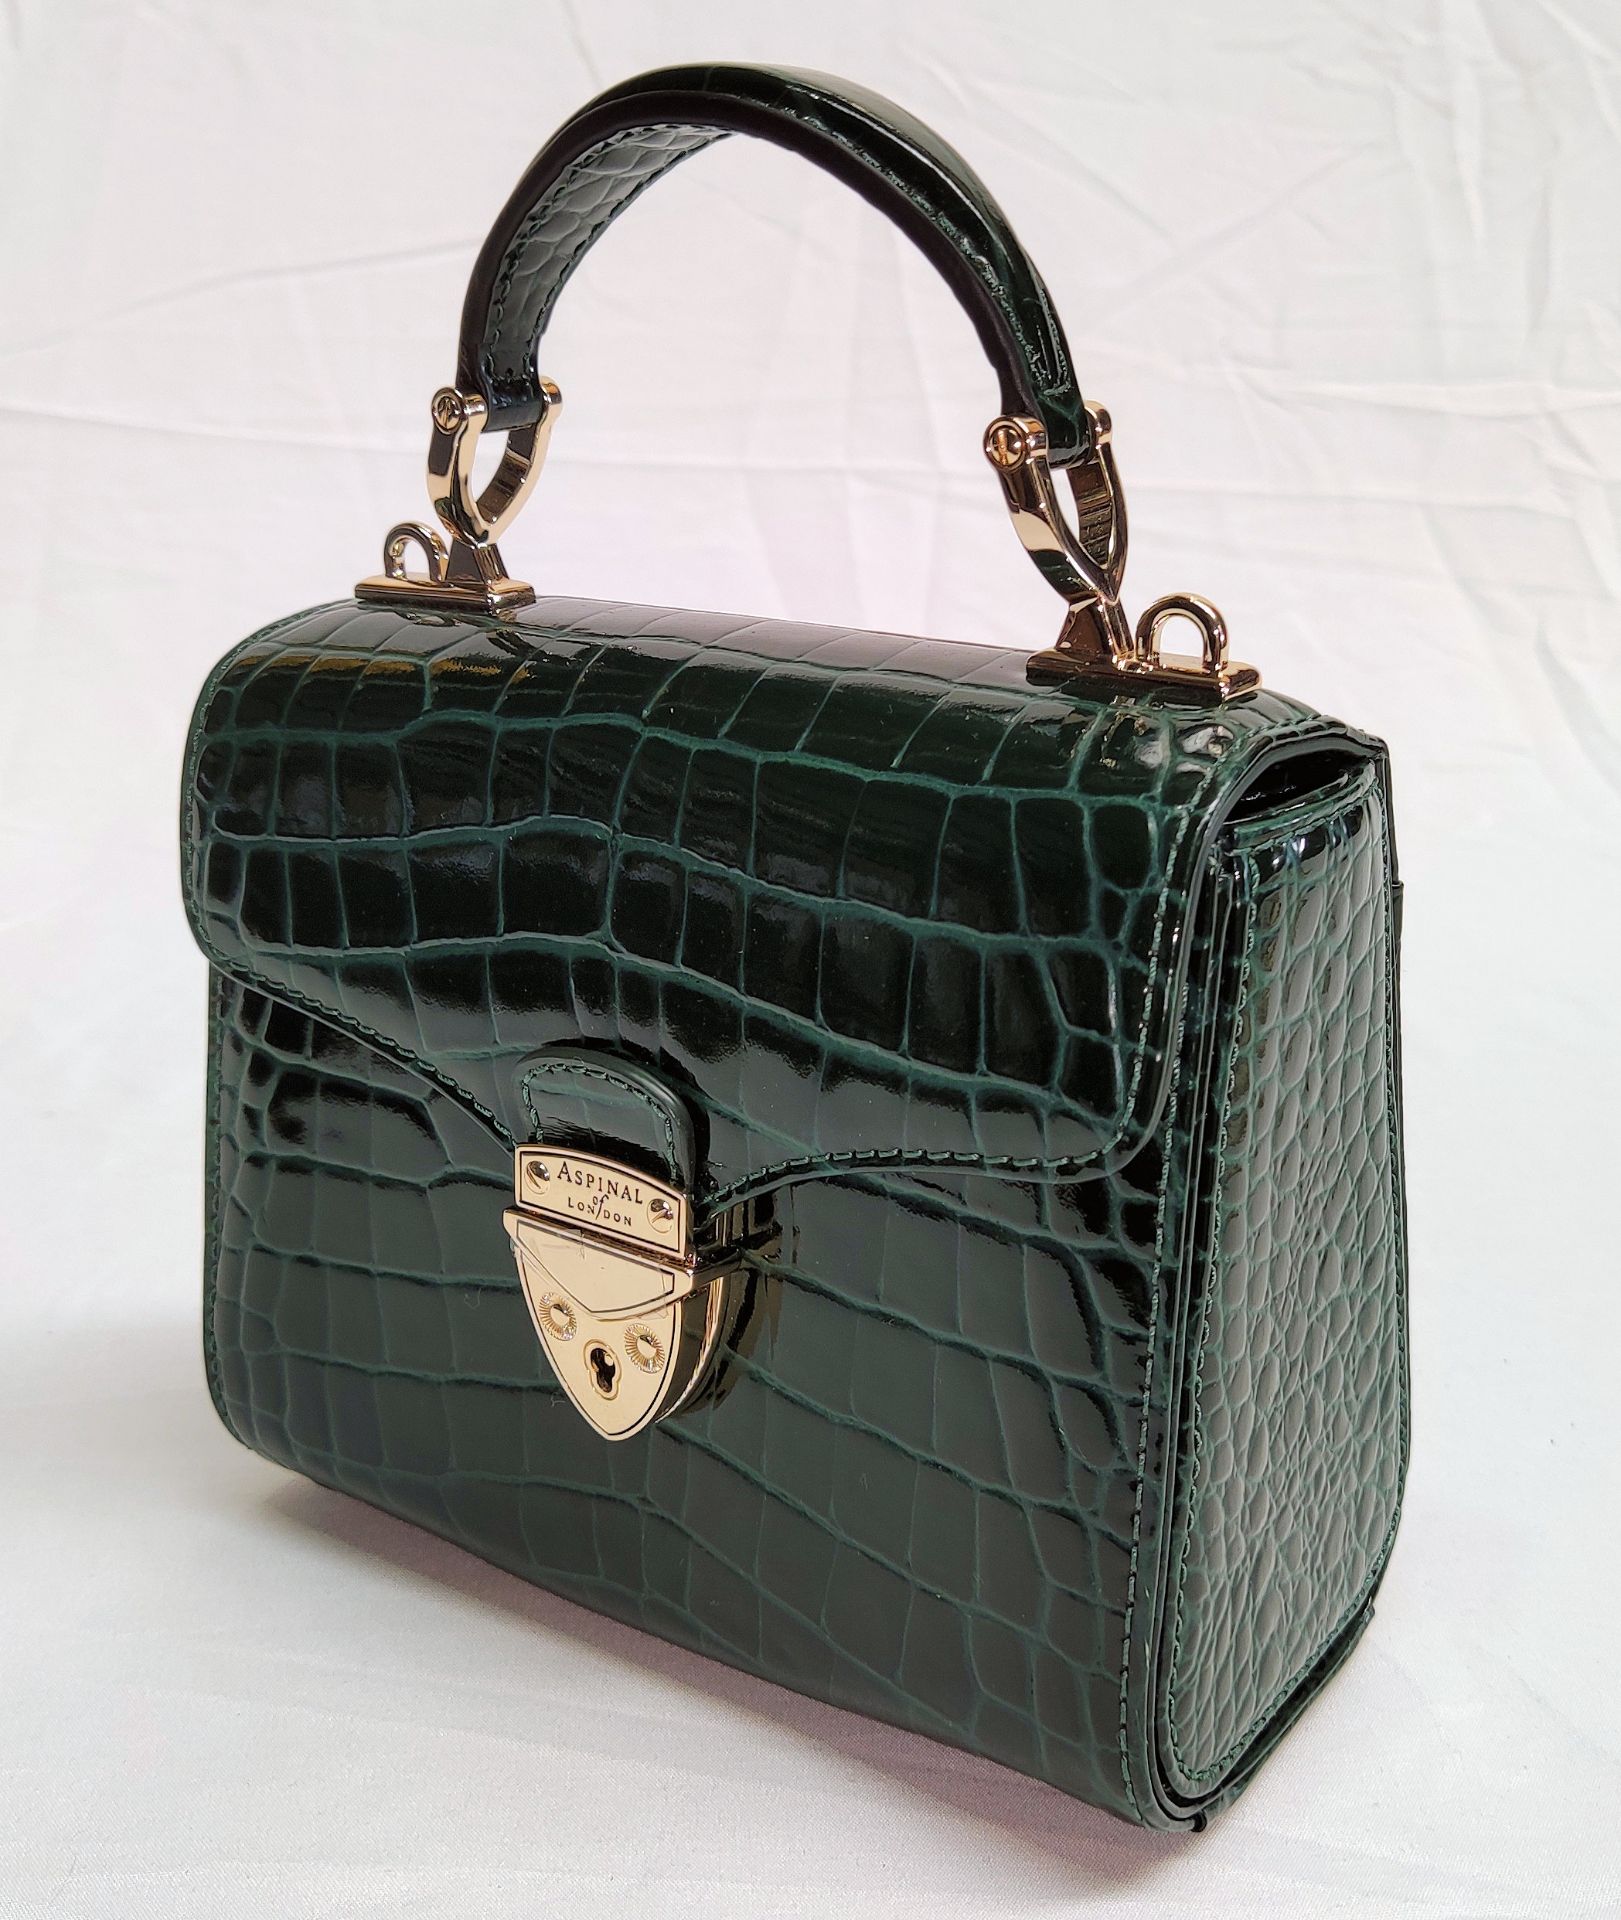 1 x ASPINAL OF LONDON Mayfair Mini Bag - Evergreen Patent Croc - Boxed - Original RRP £495 - Ref: - Image 2 of 21